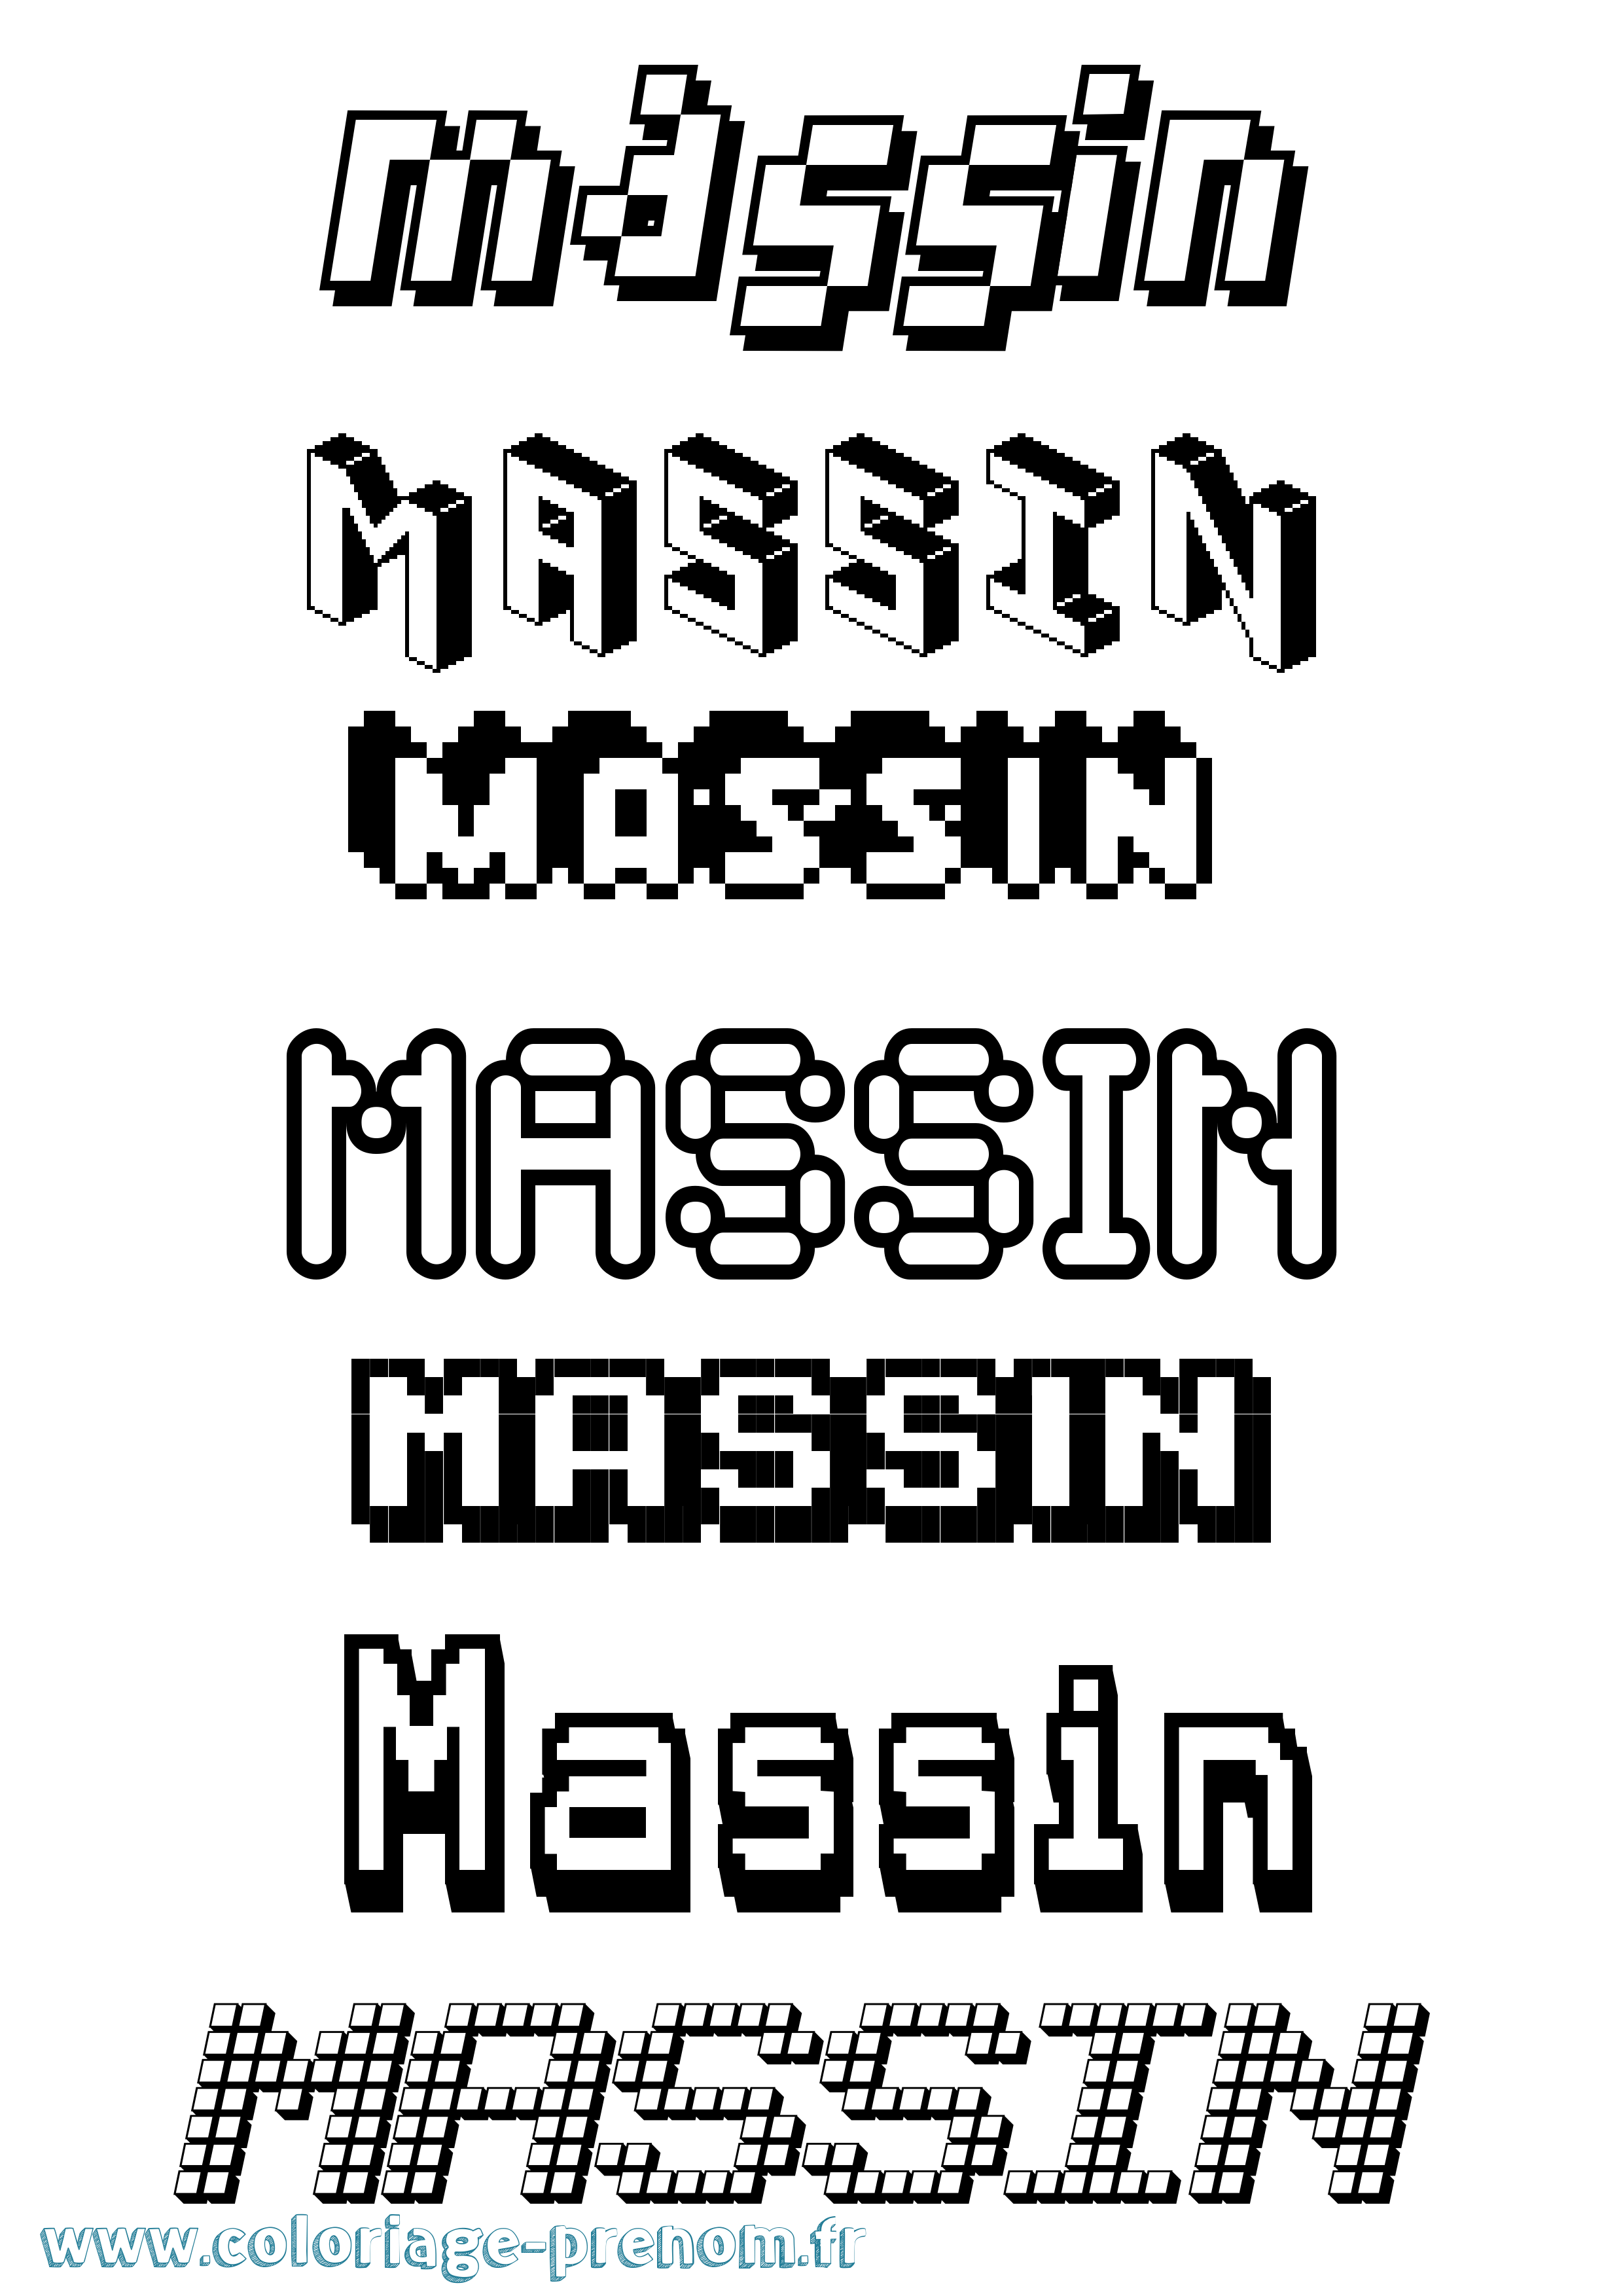 Coloriage prénom Massin Pixel